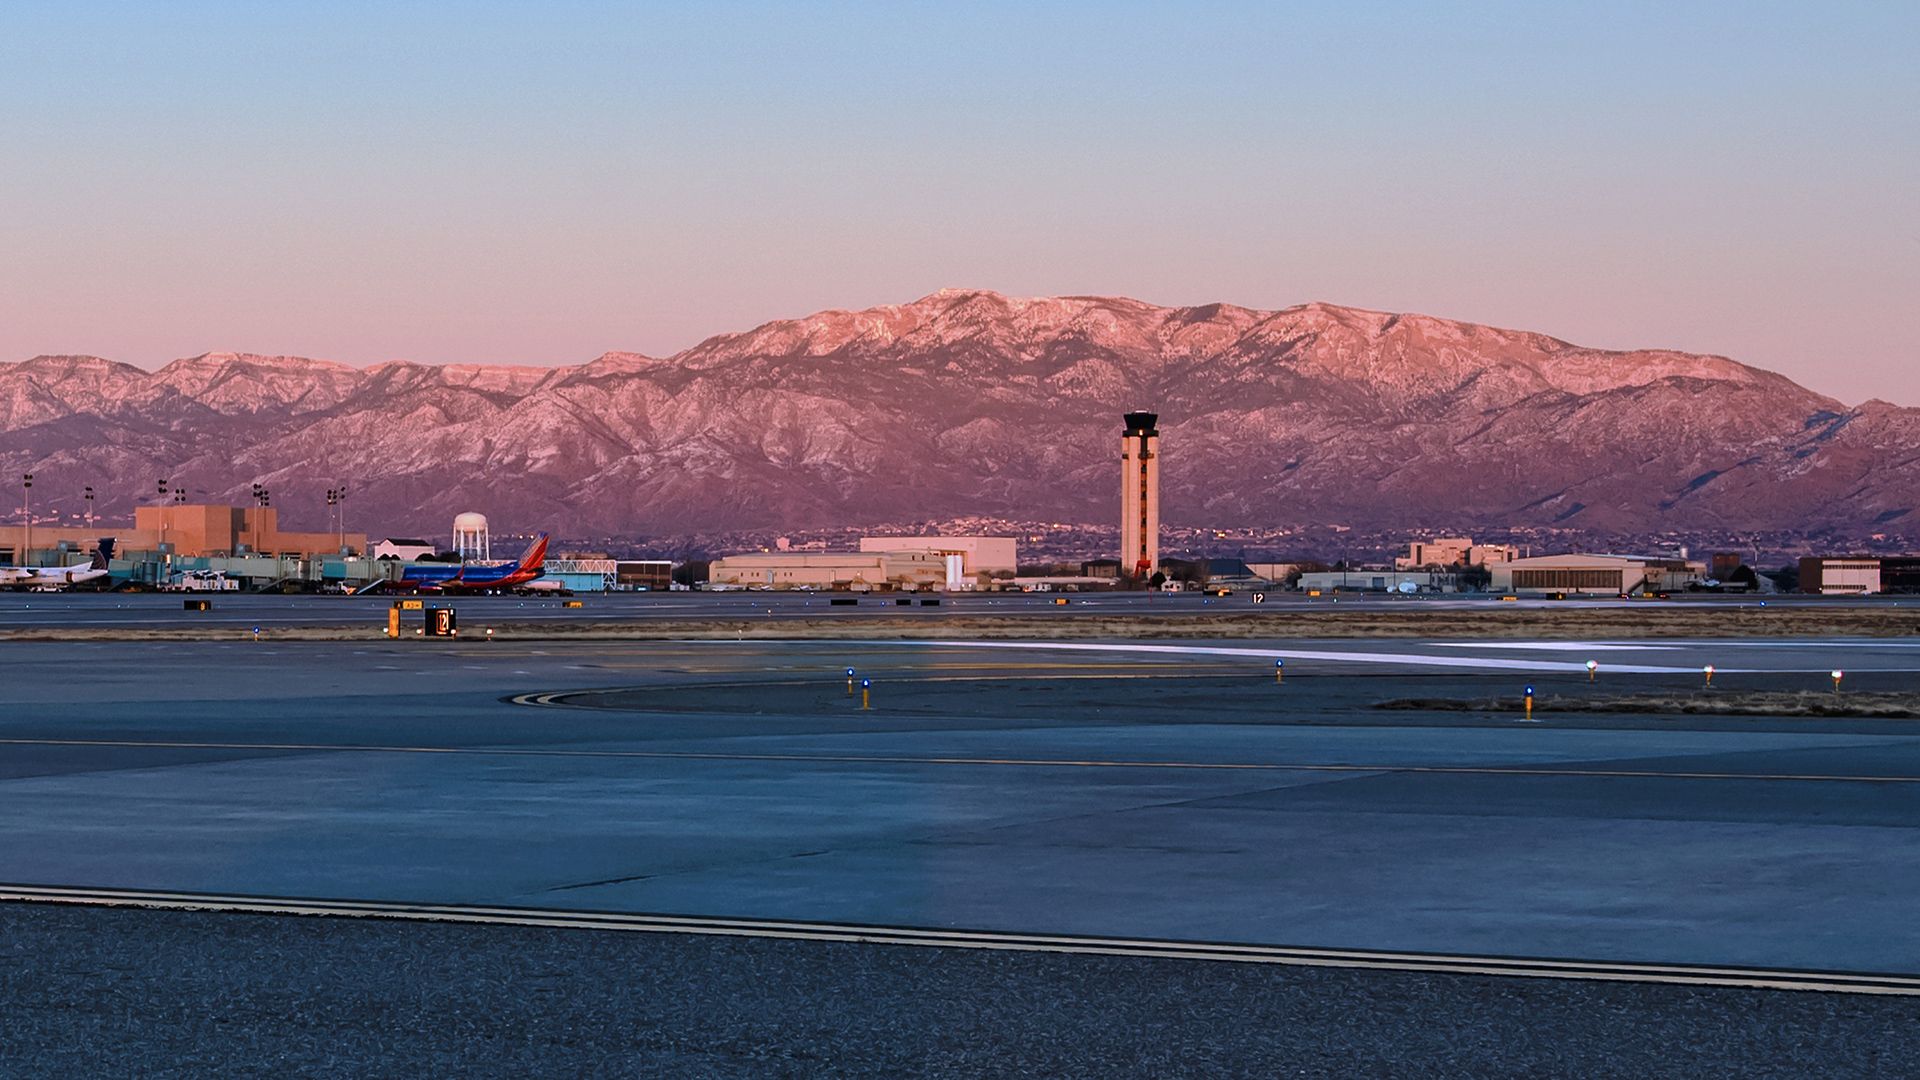  Albuquerque International Sunport Airport in New Mexico - ABQ